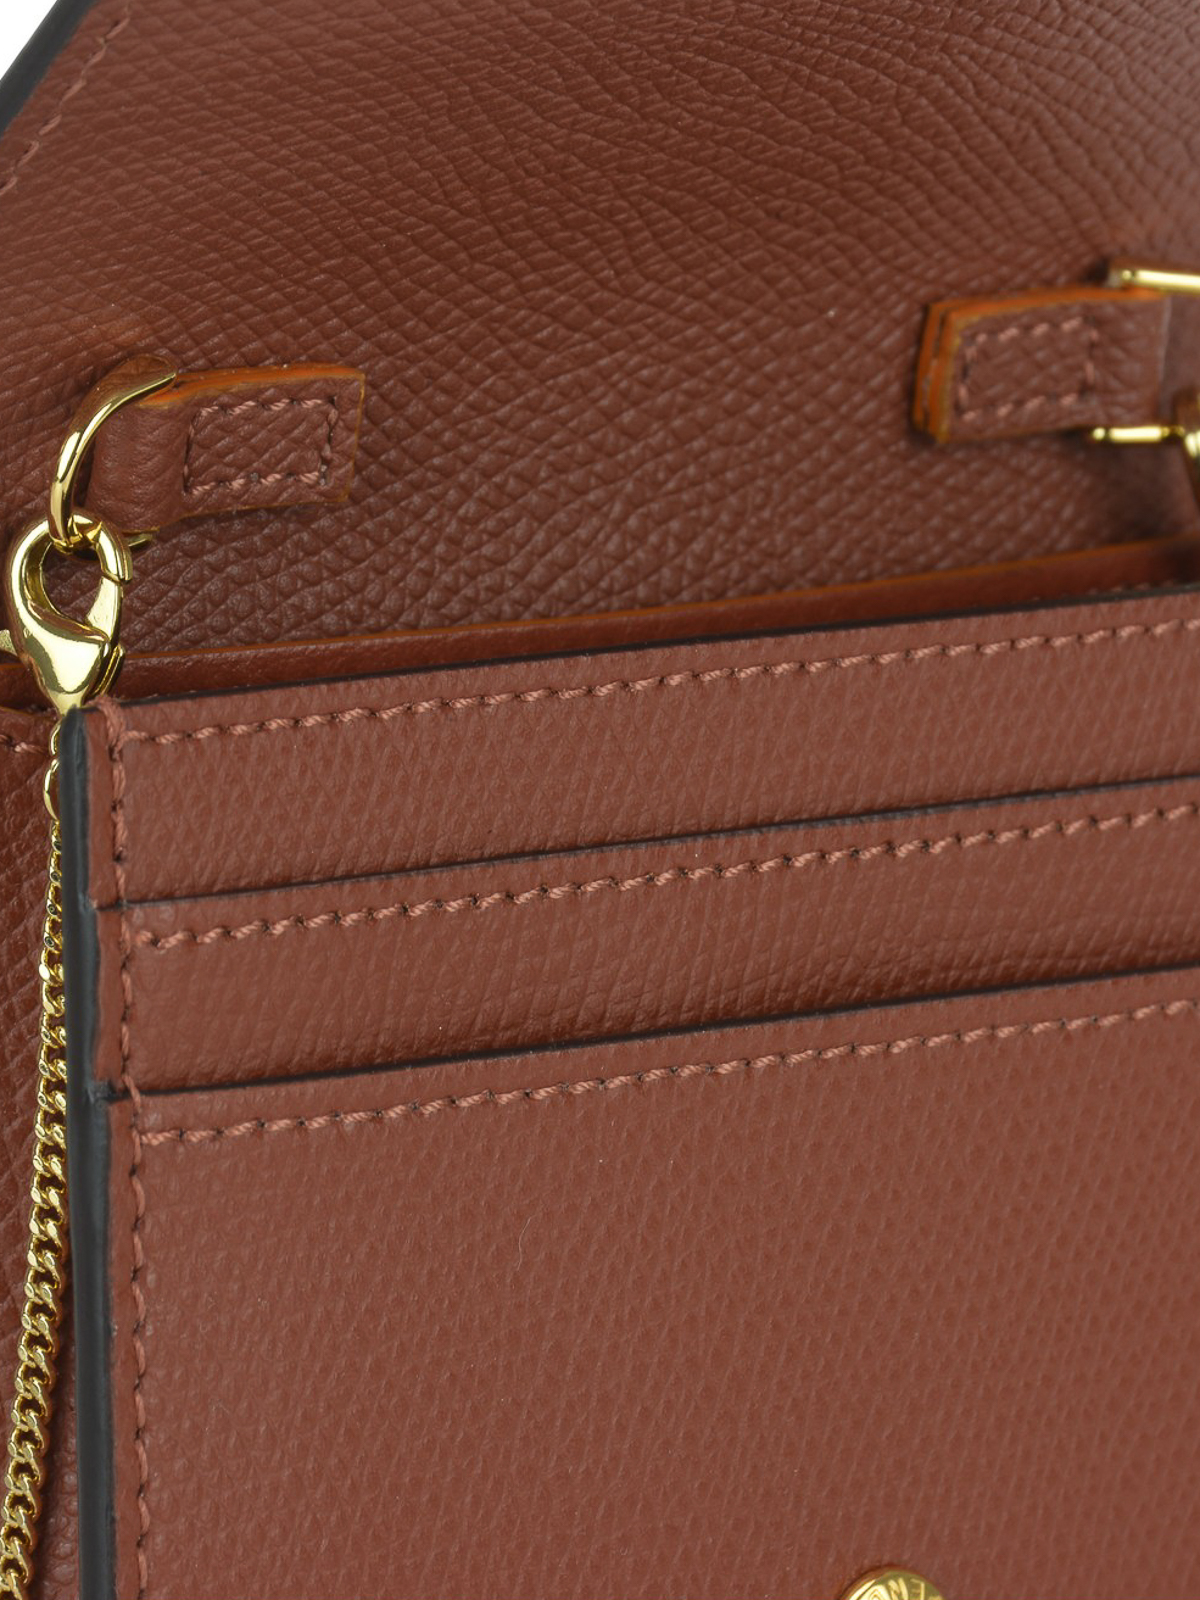 Fendi - F is Fendi leather mini bag 